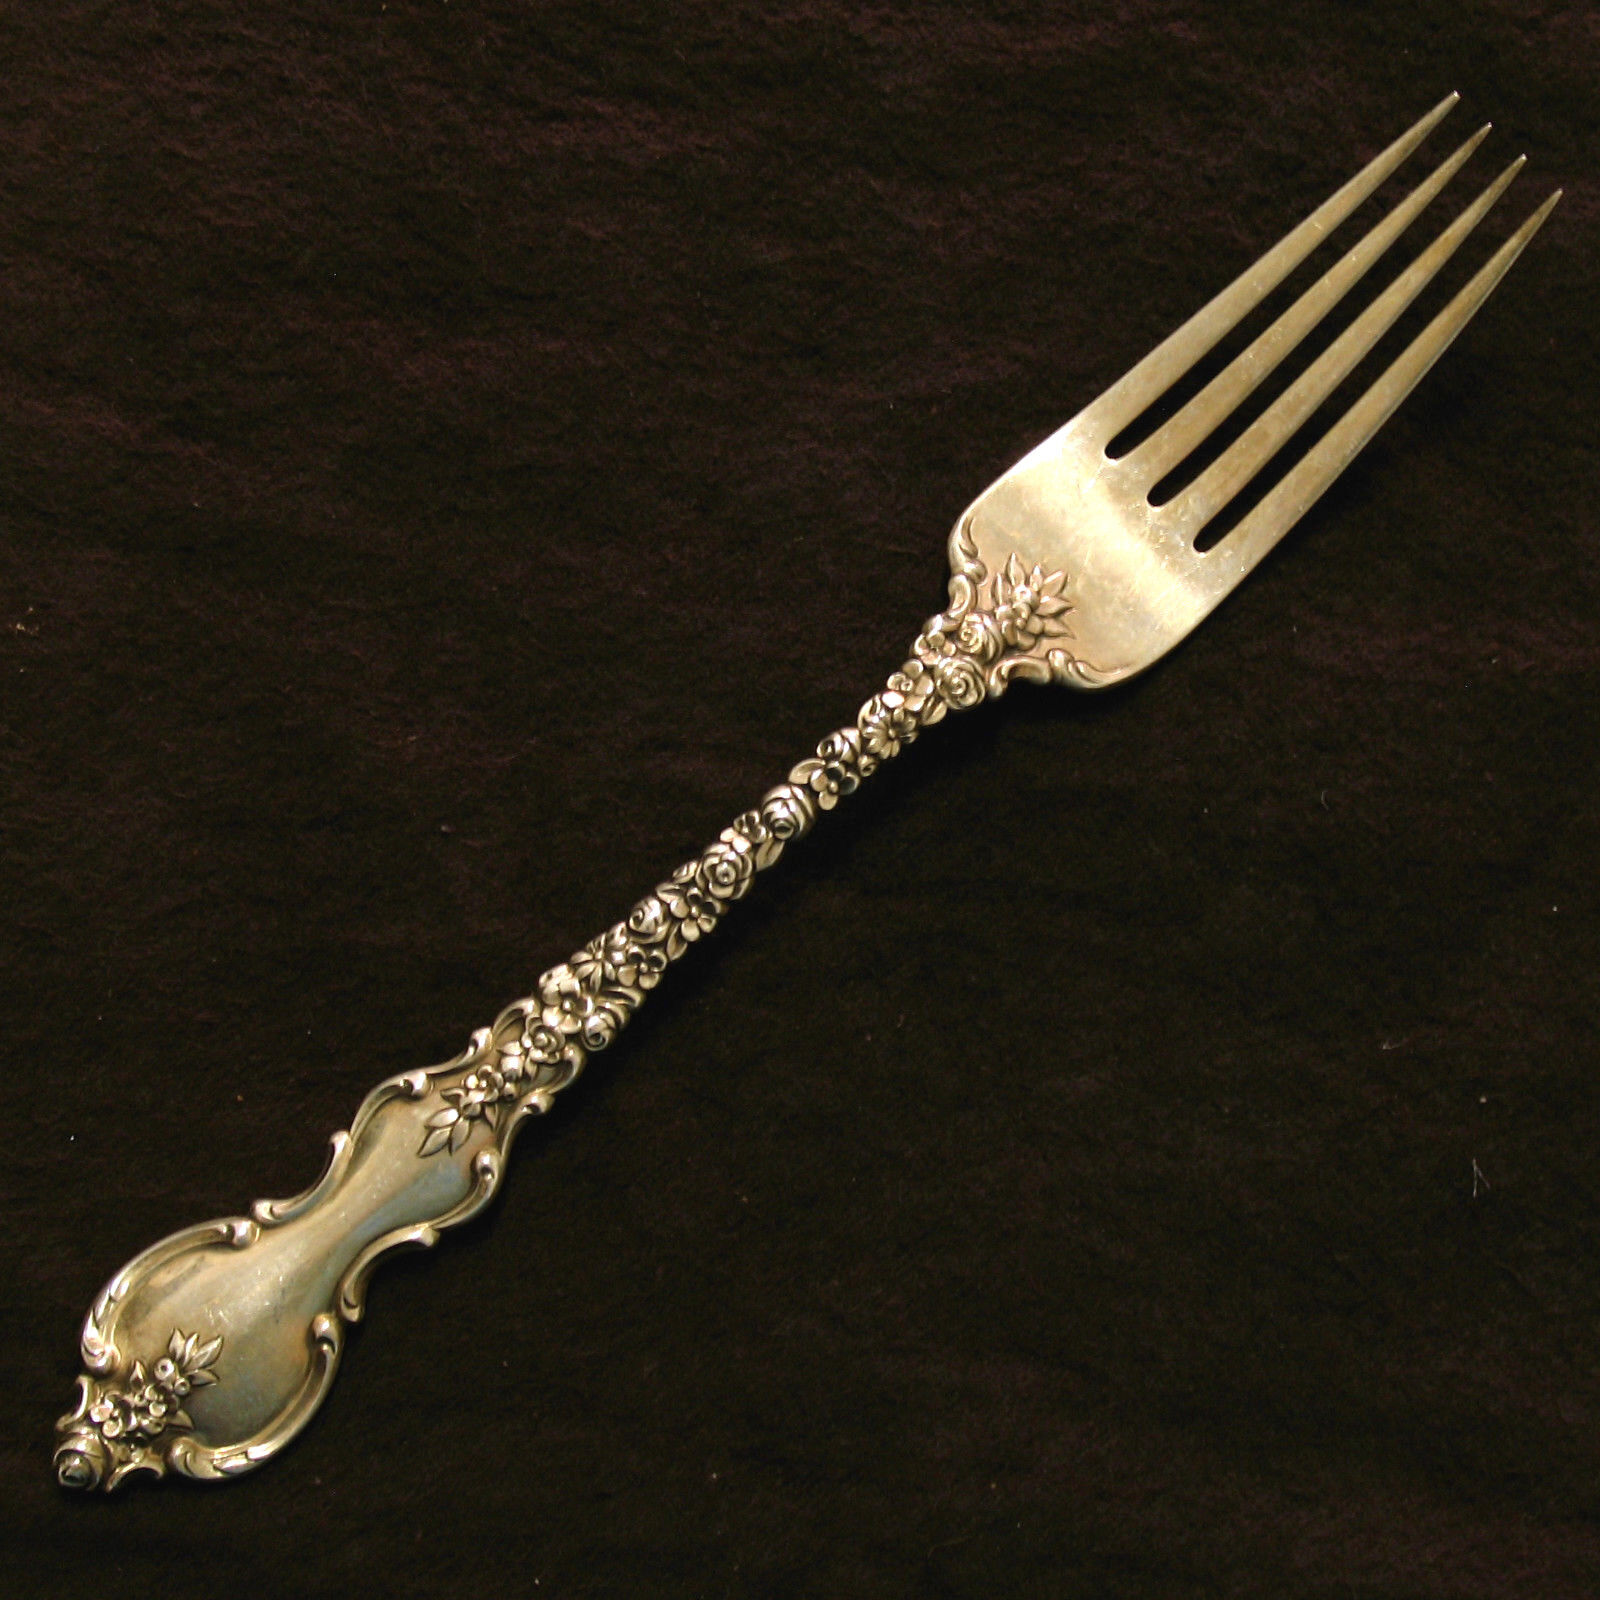 International Silver Du Barry Sterling Silver 7-3/8" Dinner Fork - No Monogram